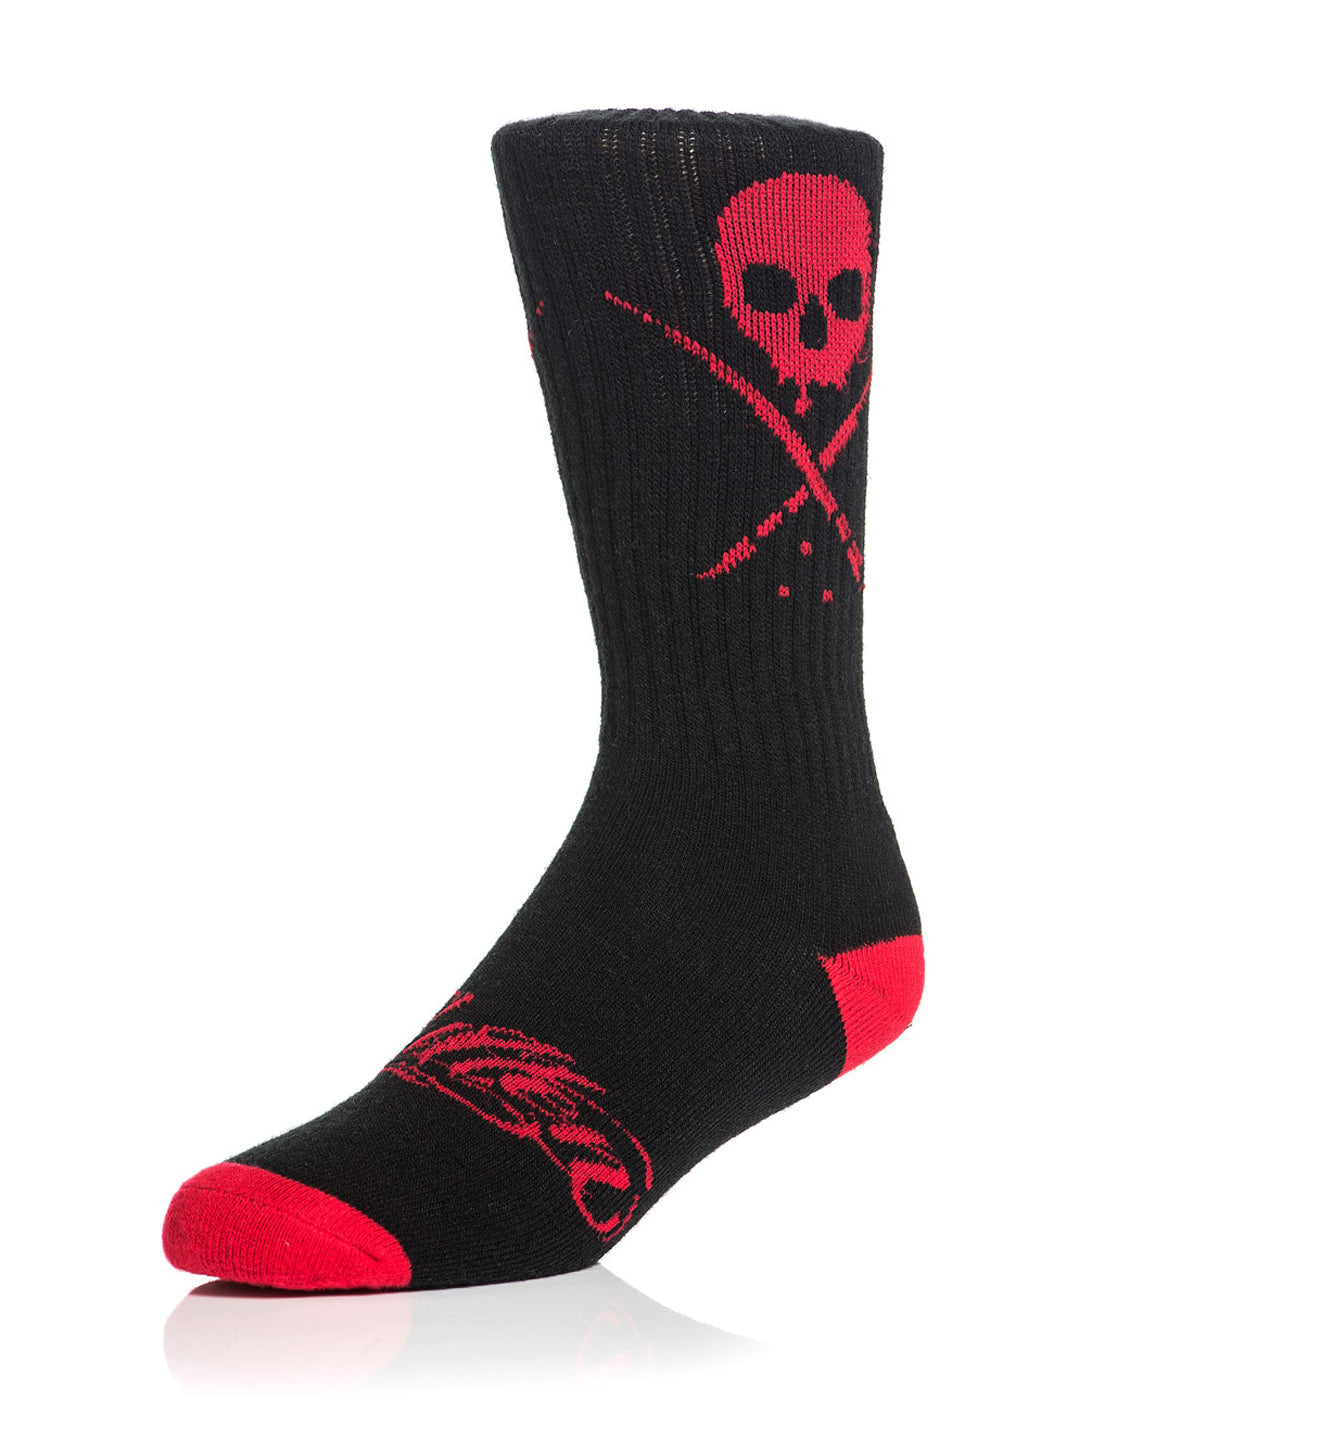 Standard Issue Socks Black/Red